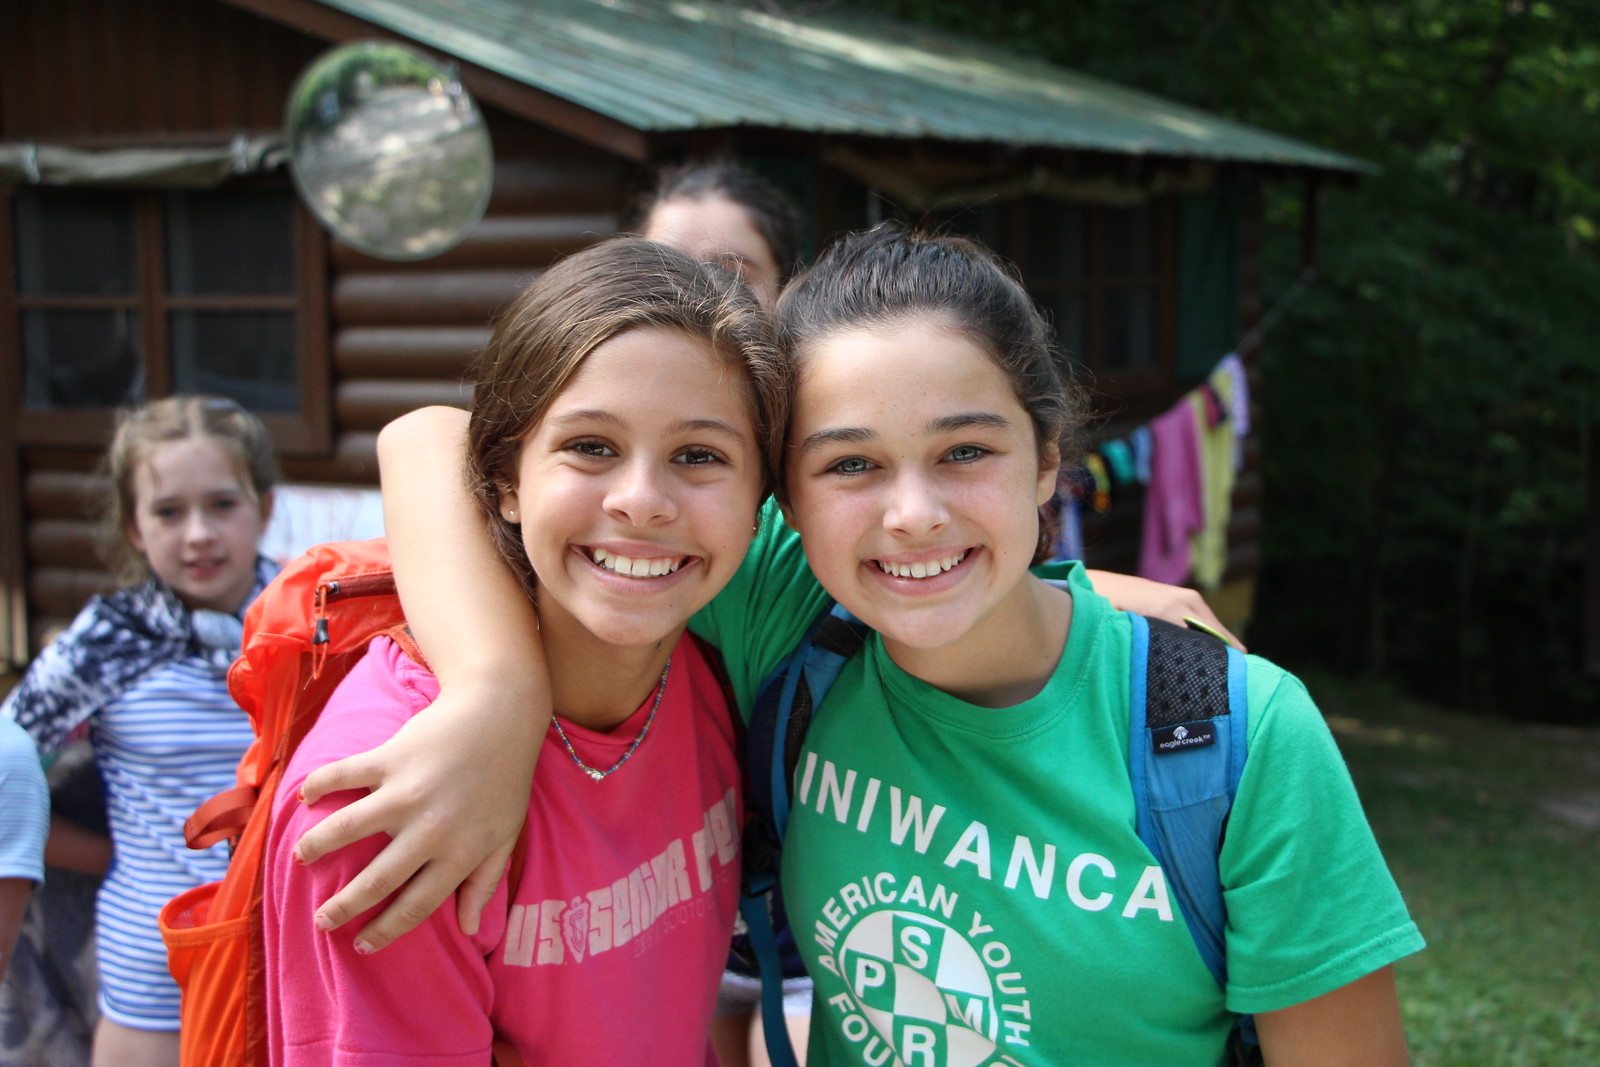 Miniwanca, Girls Camp, Onesie Tuesday